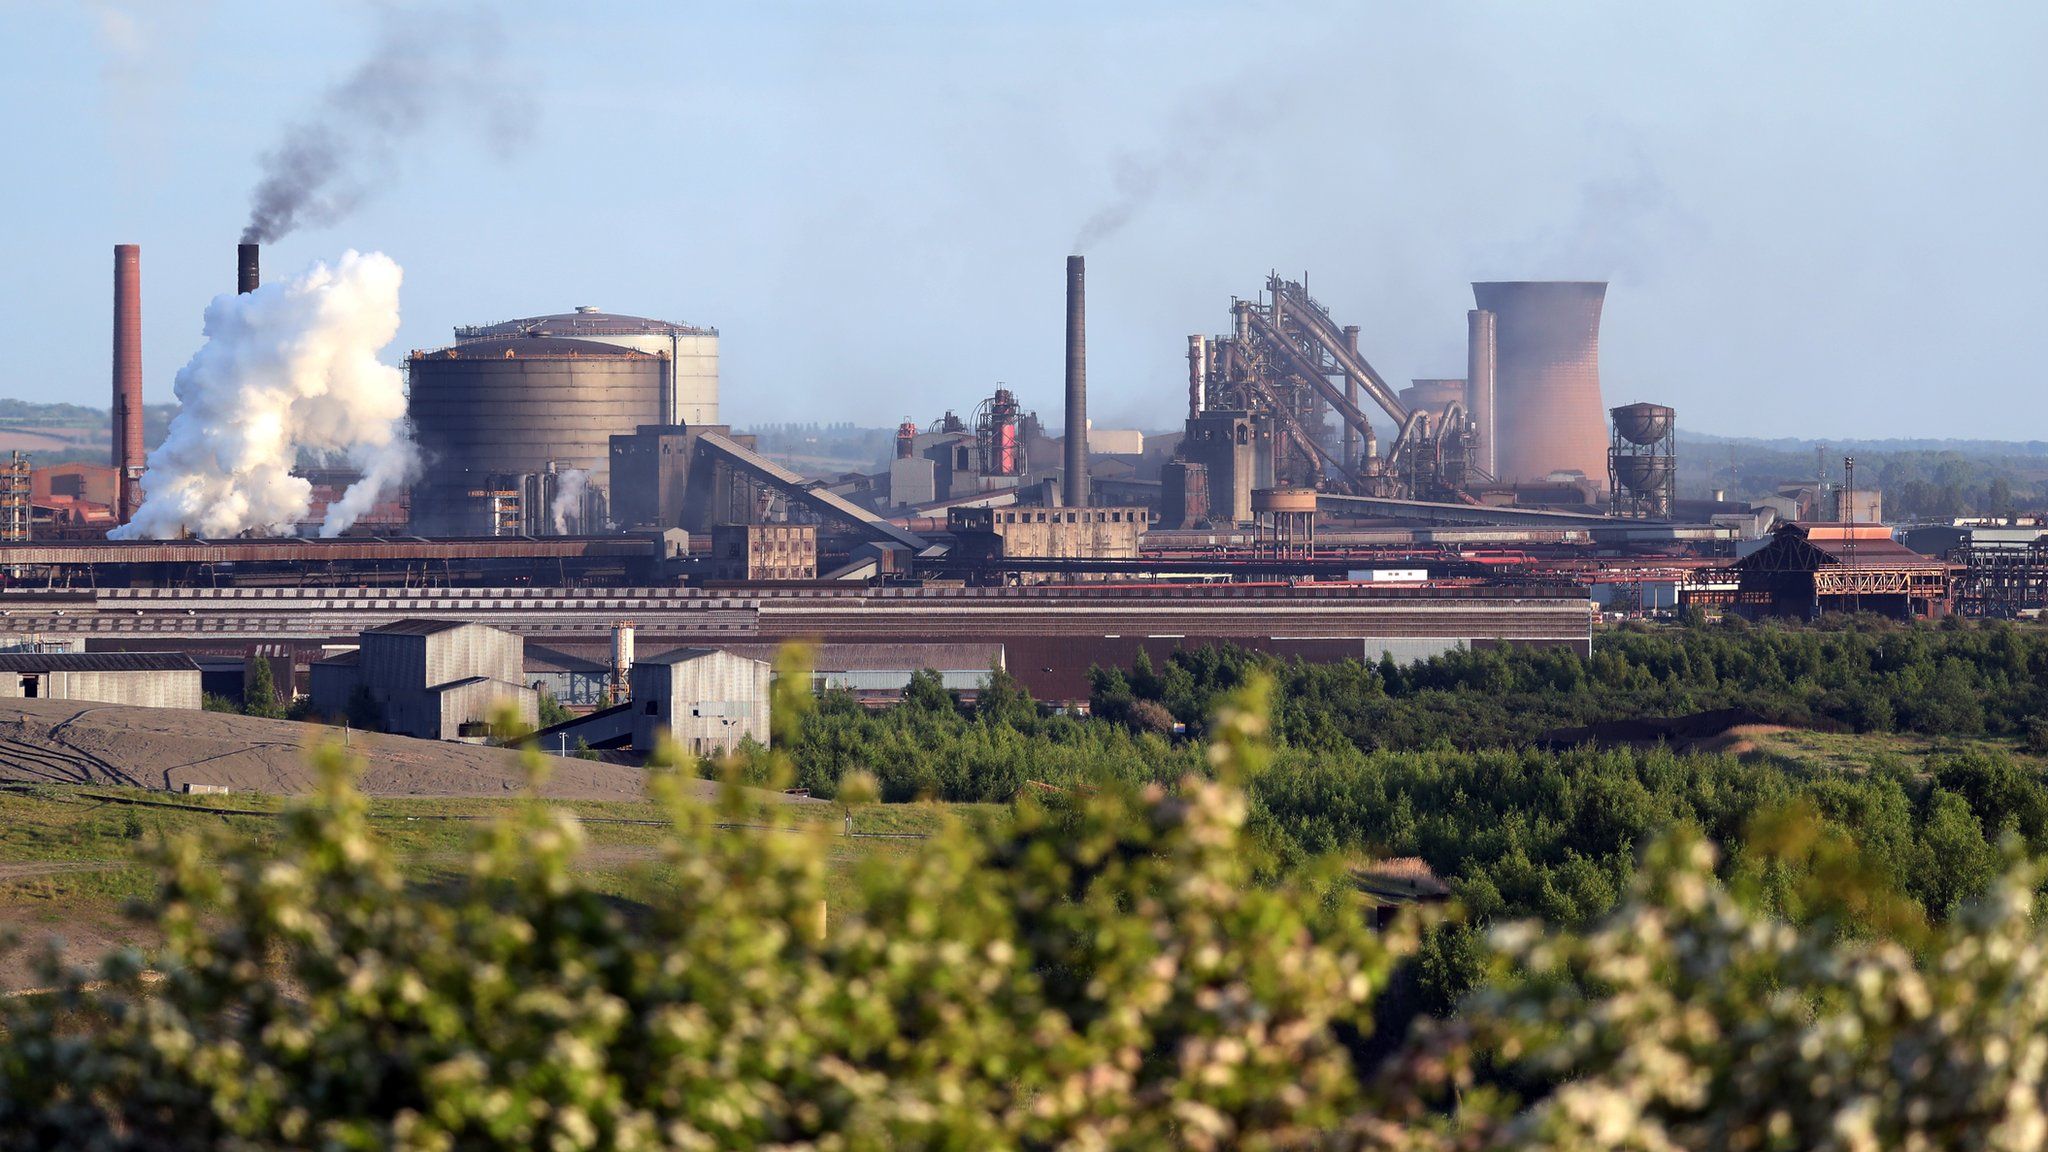 British Steel Scunthorpe plant wide shot